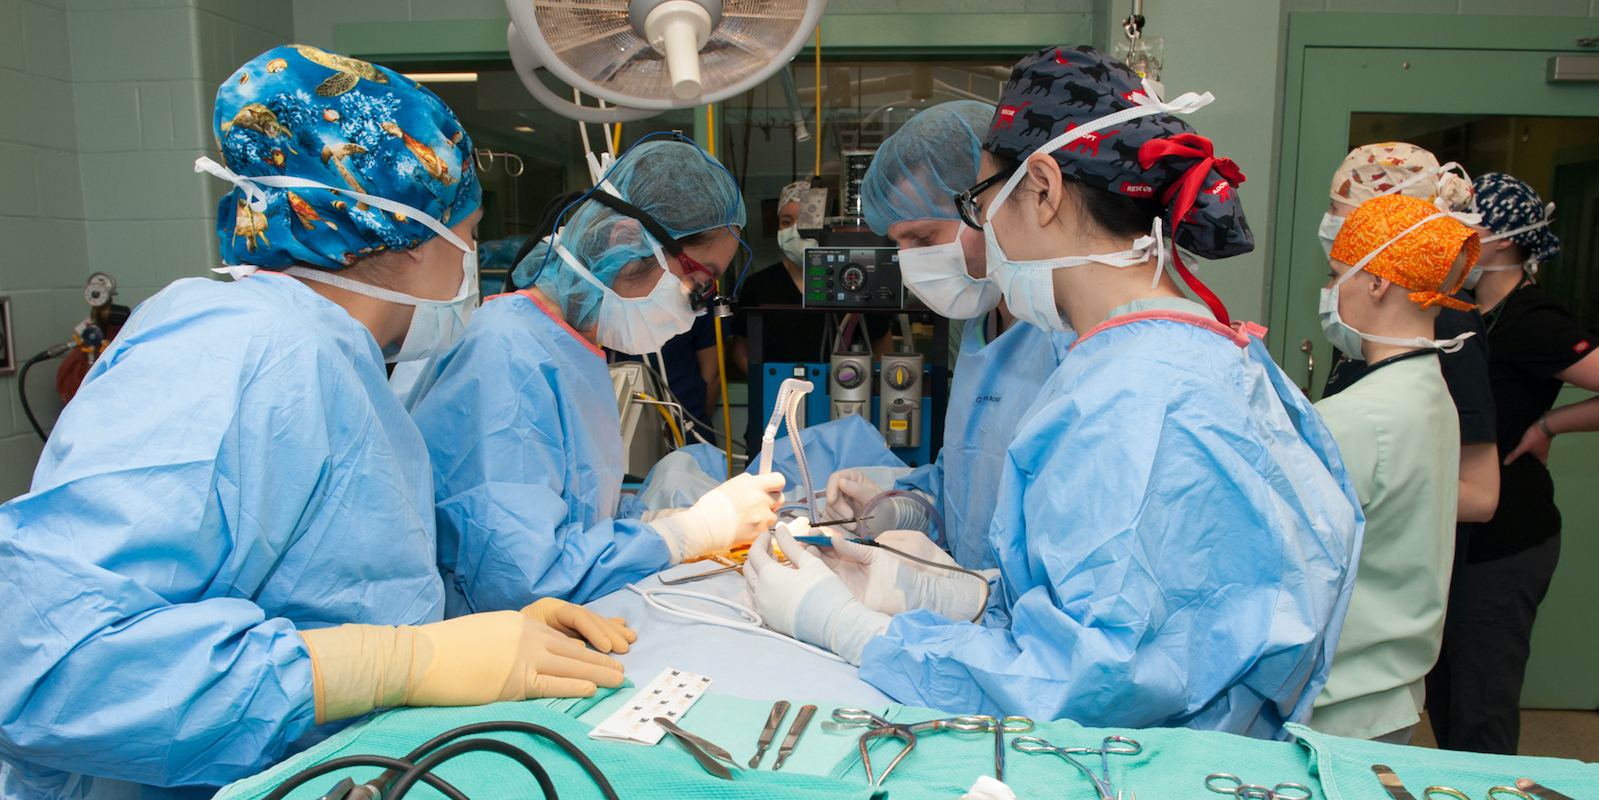 veterinary students perform surgery